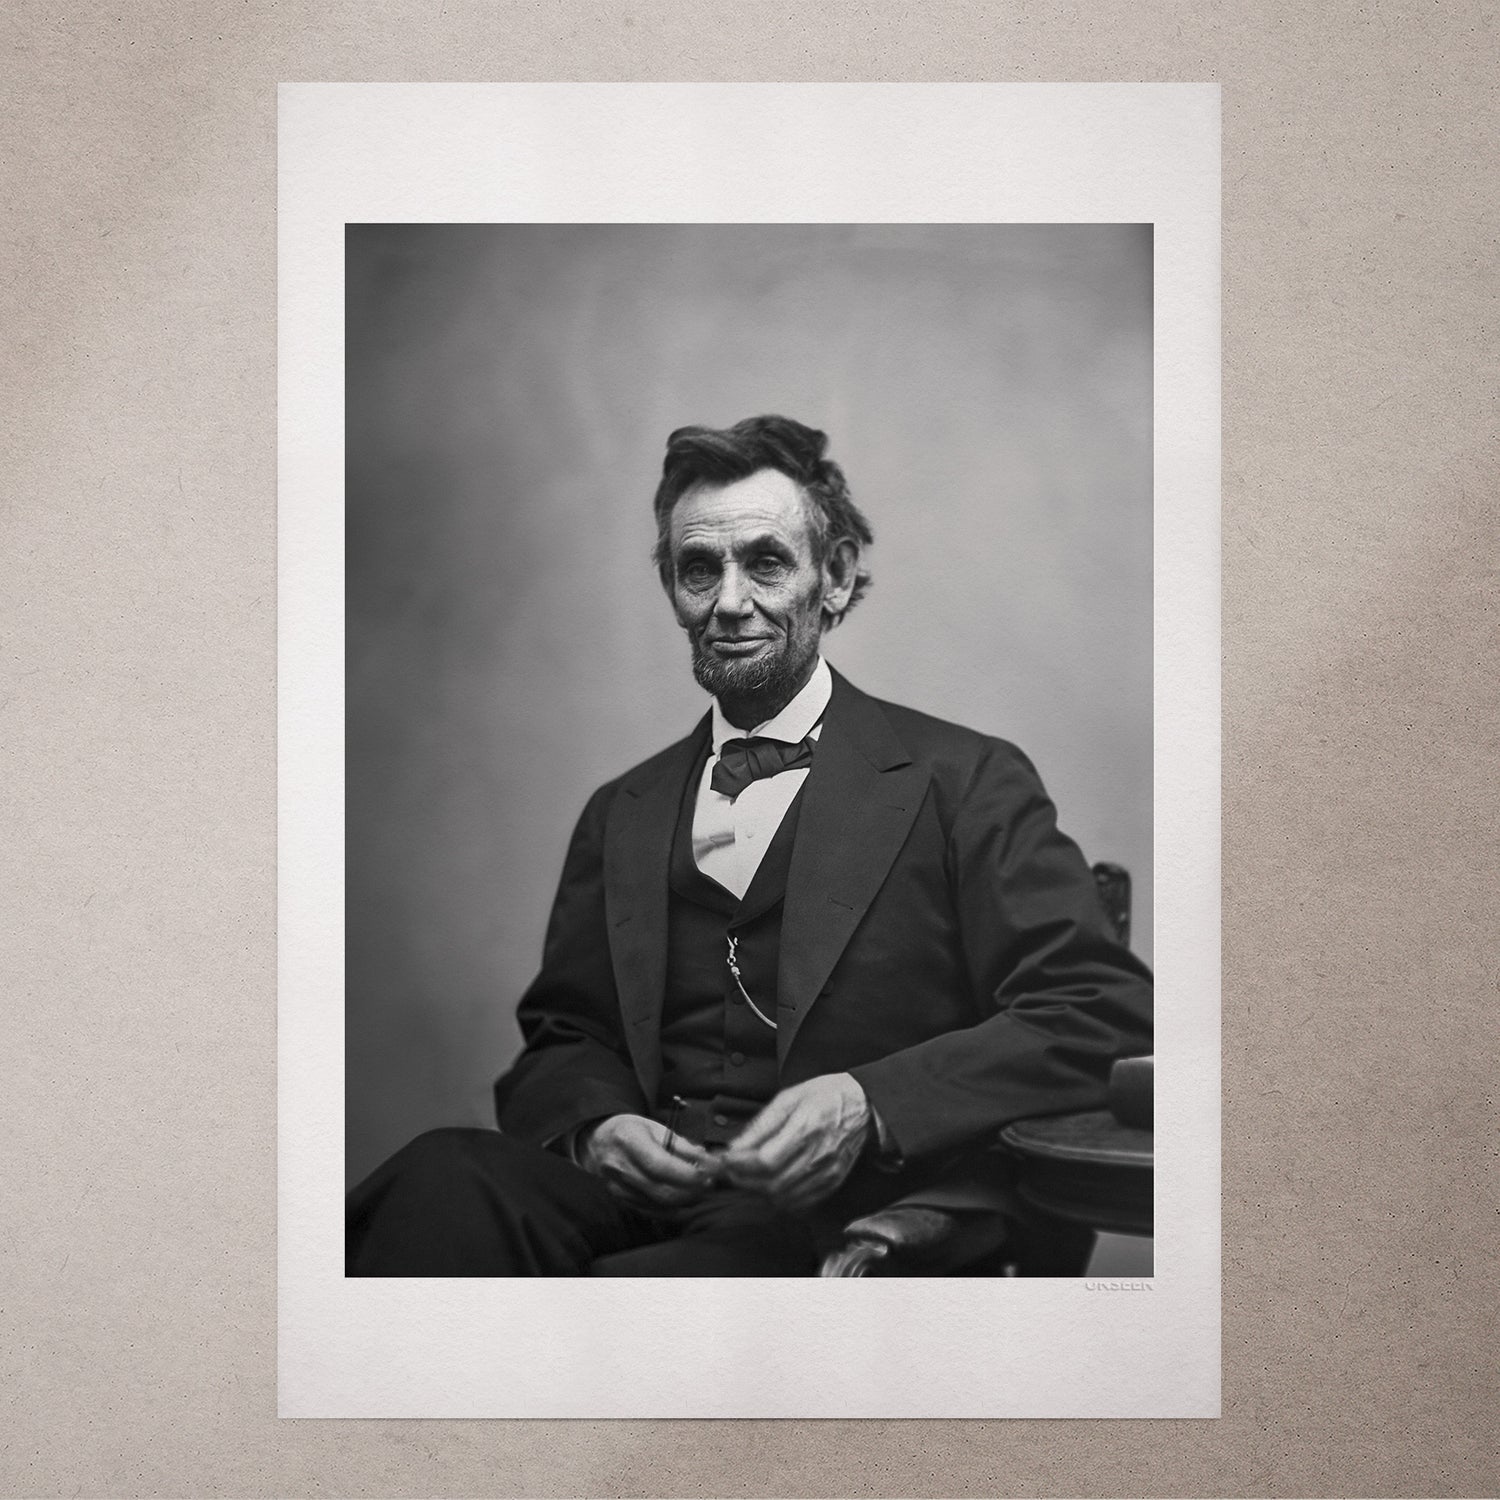 Abraham Lincoln by Alexander Gardner, 1865